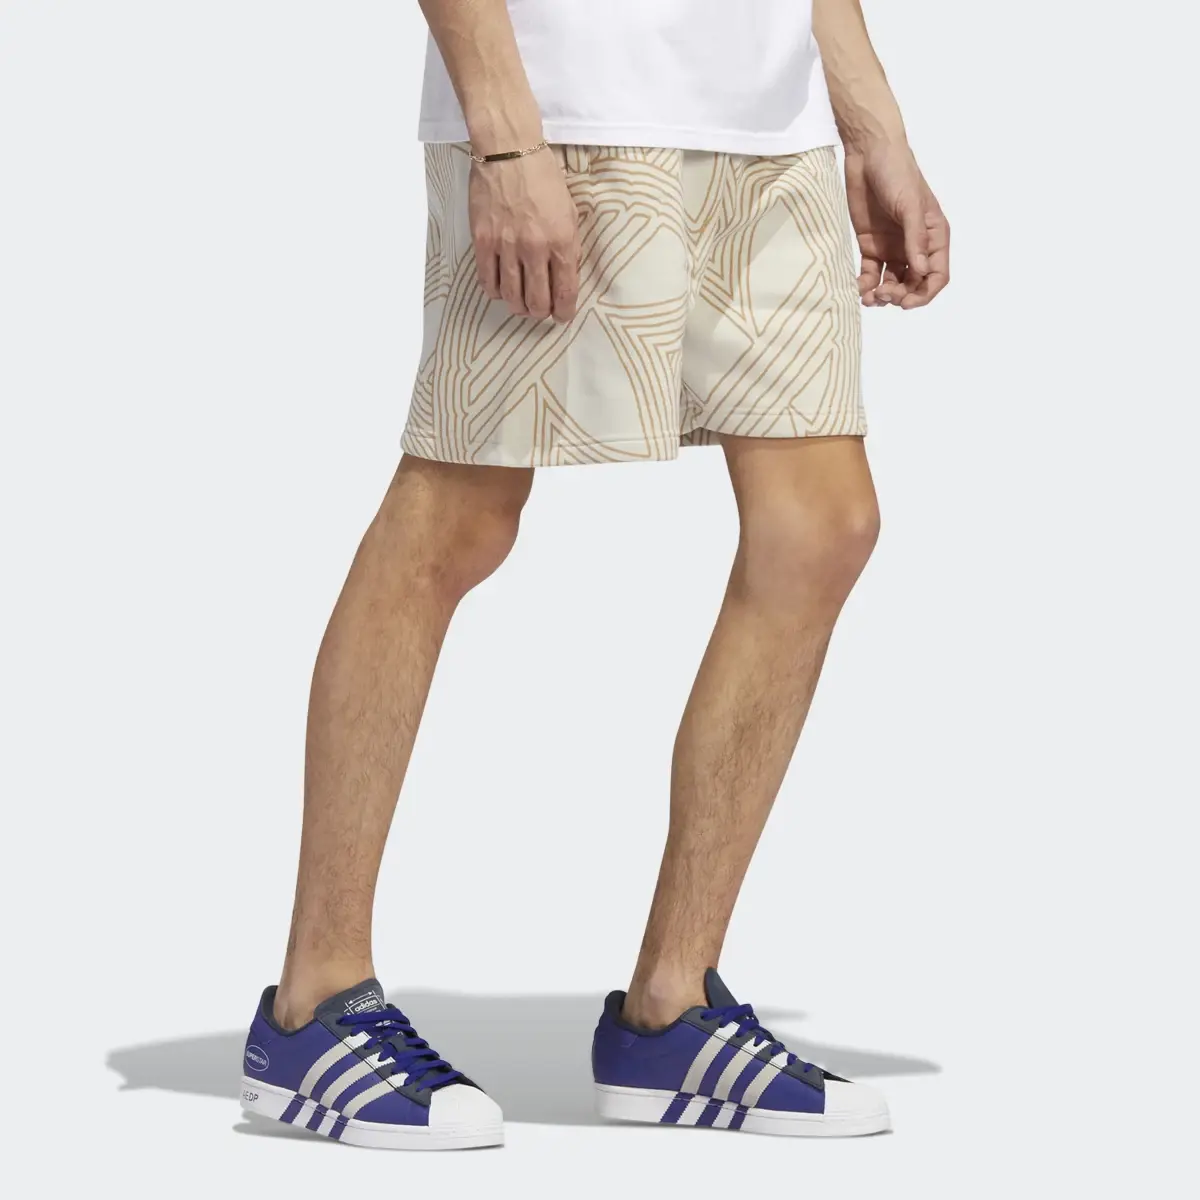 Adidas Original Athletic Club Allover Print Shorts. 3